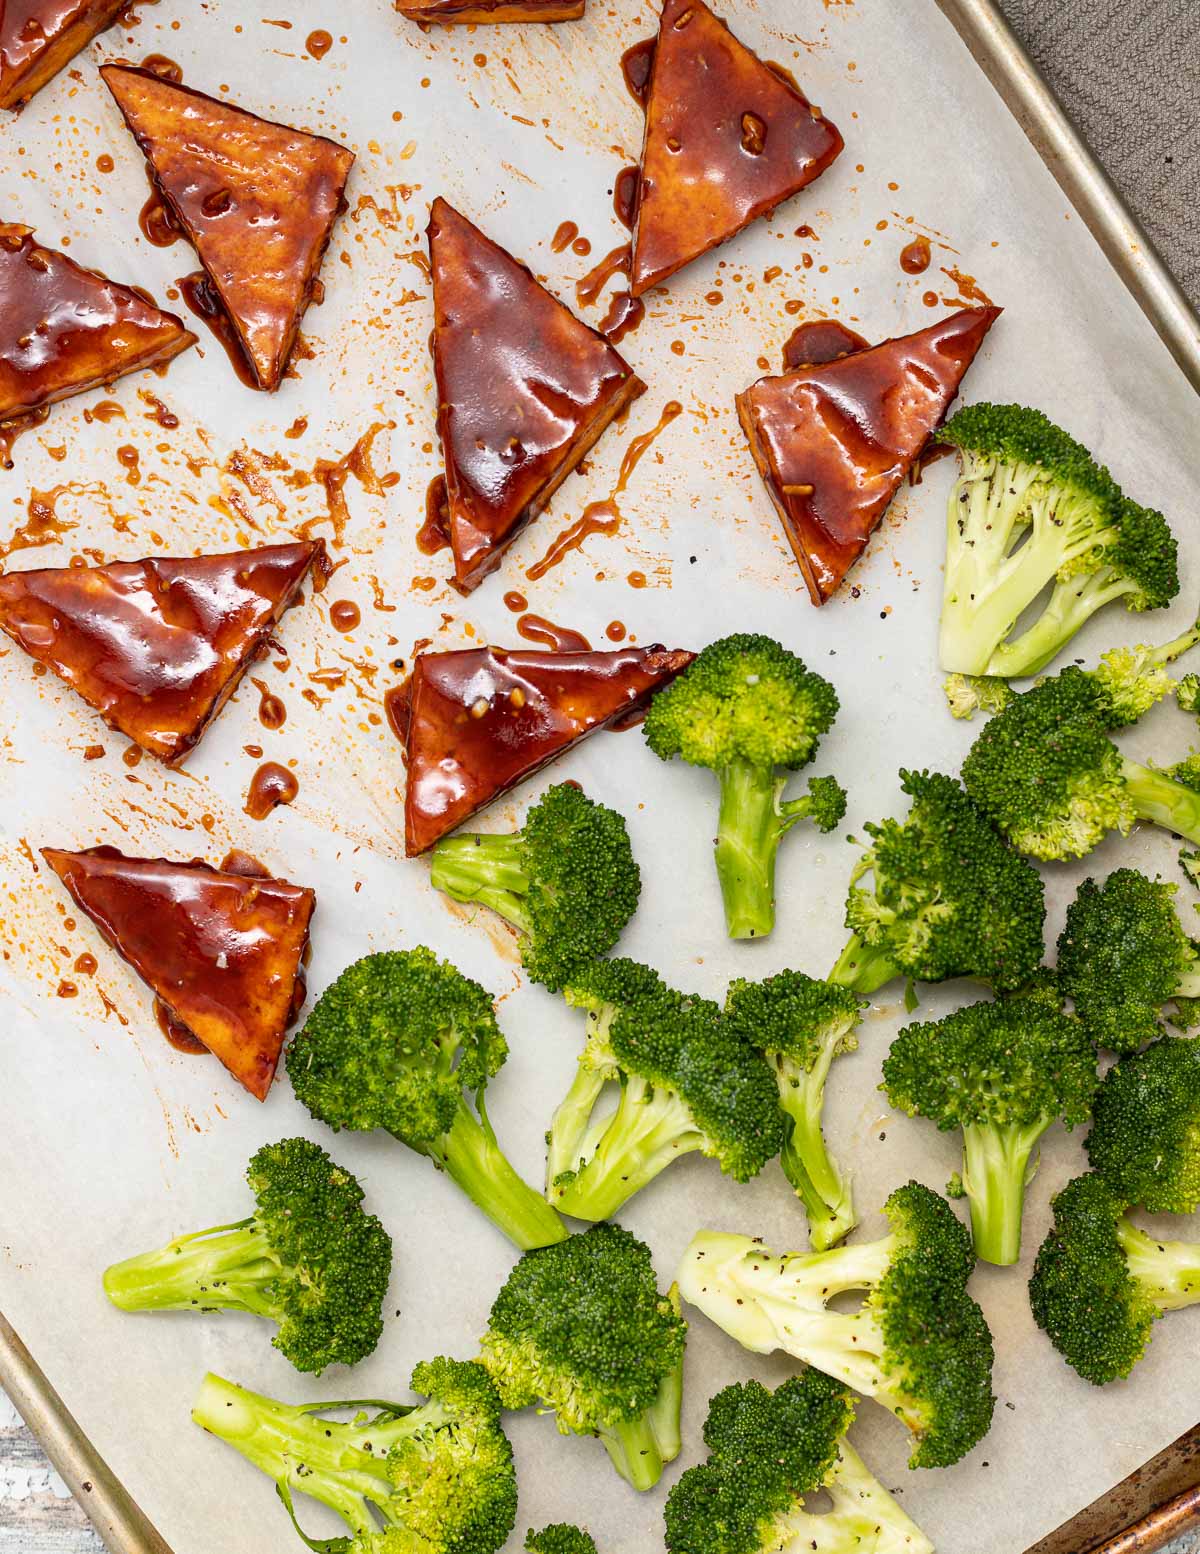 tofu and broccoli on a baking tray